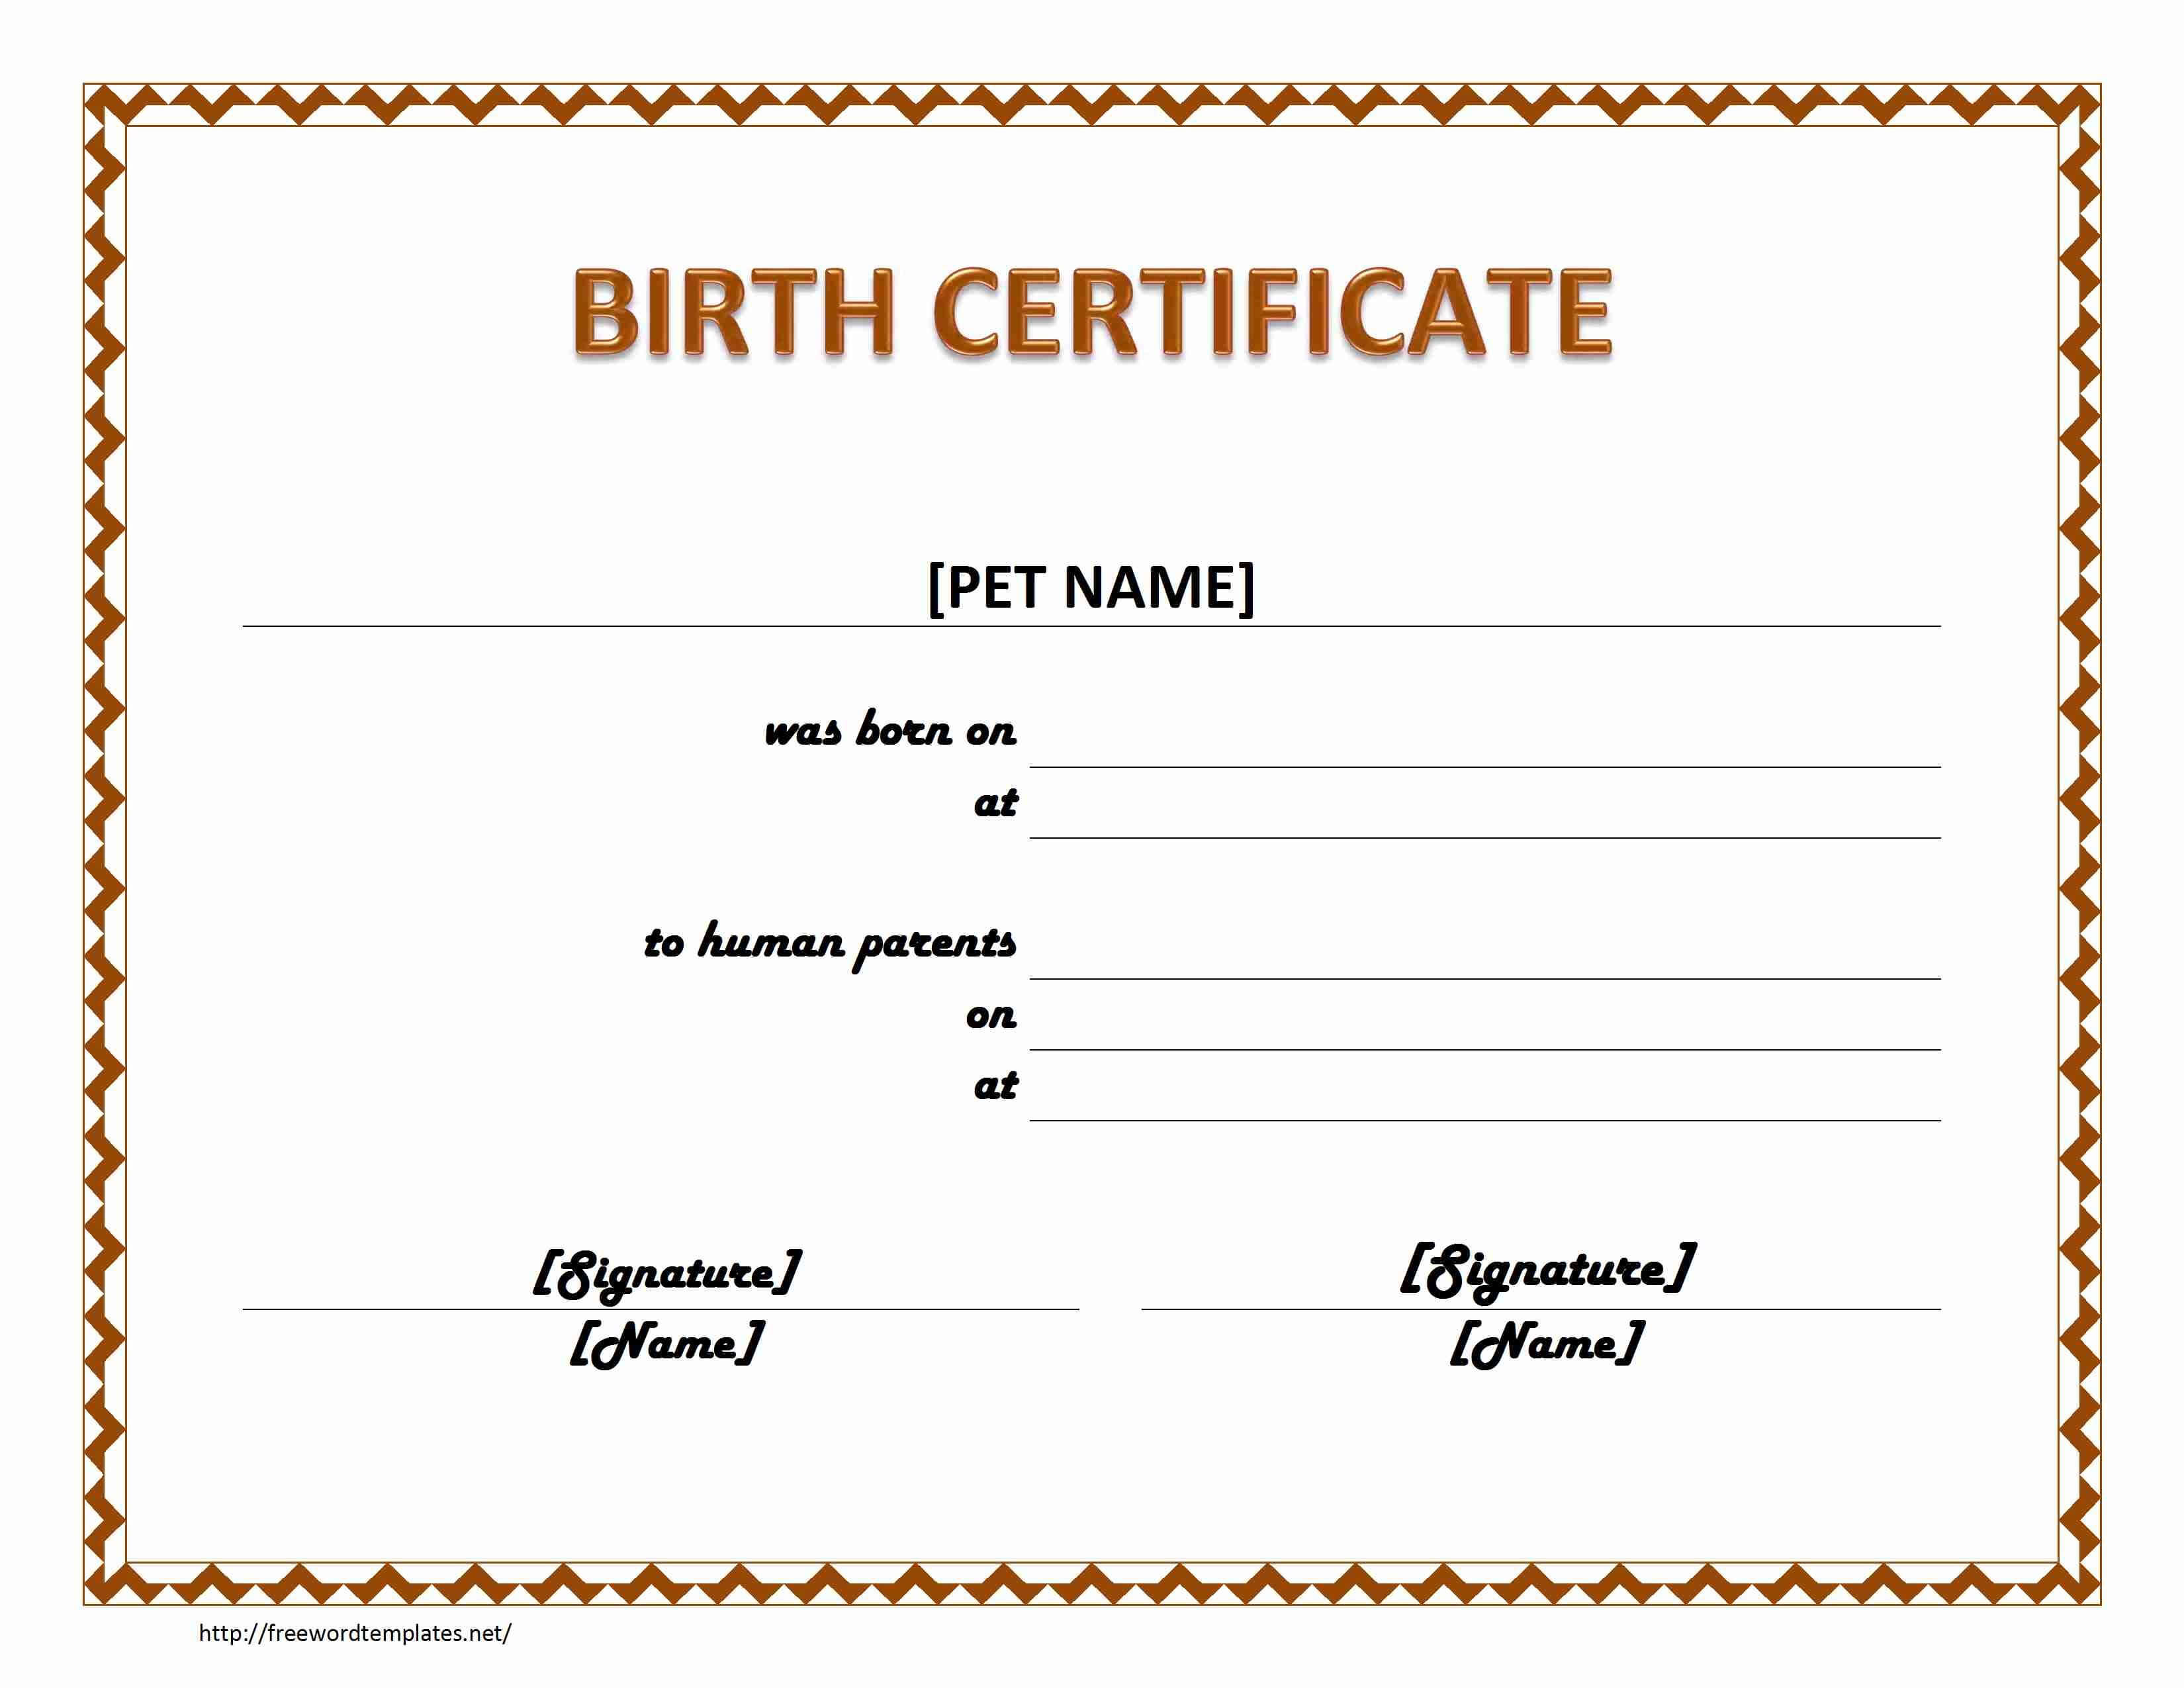 Pet Birth Certificate Maker | Pet Birth Certificate For Word Intended For Birth Certificate Fake Template